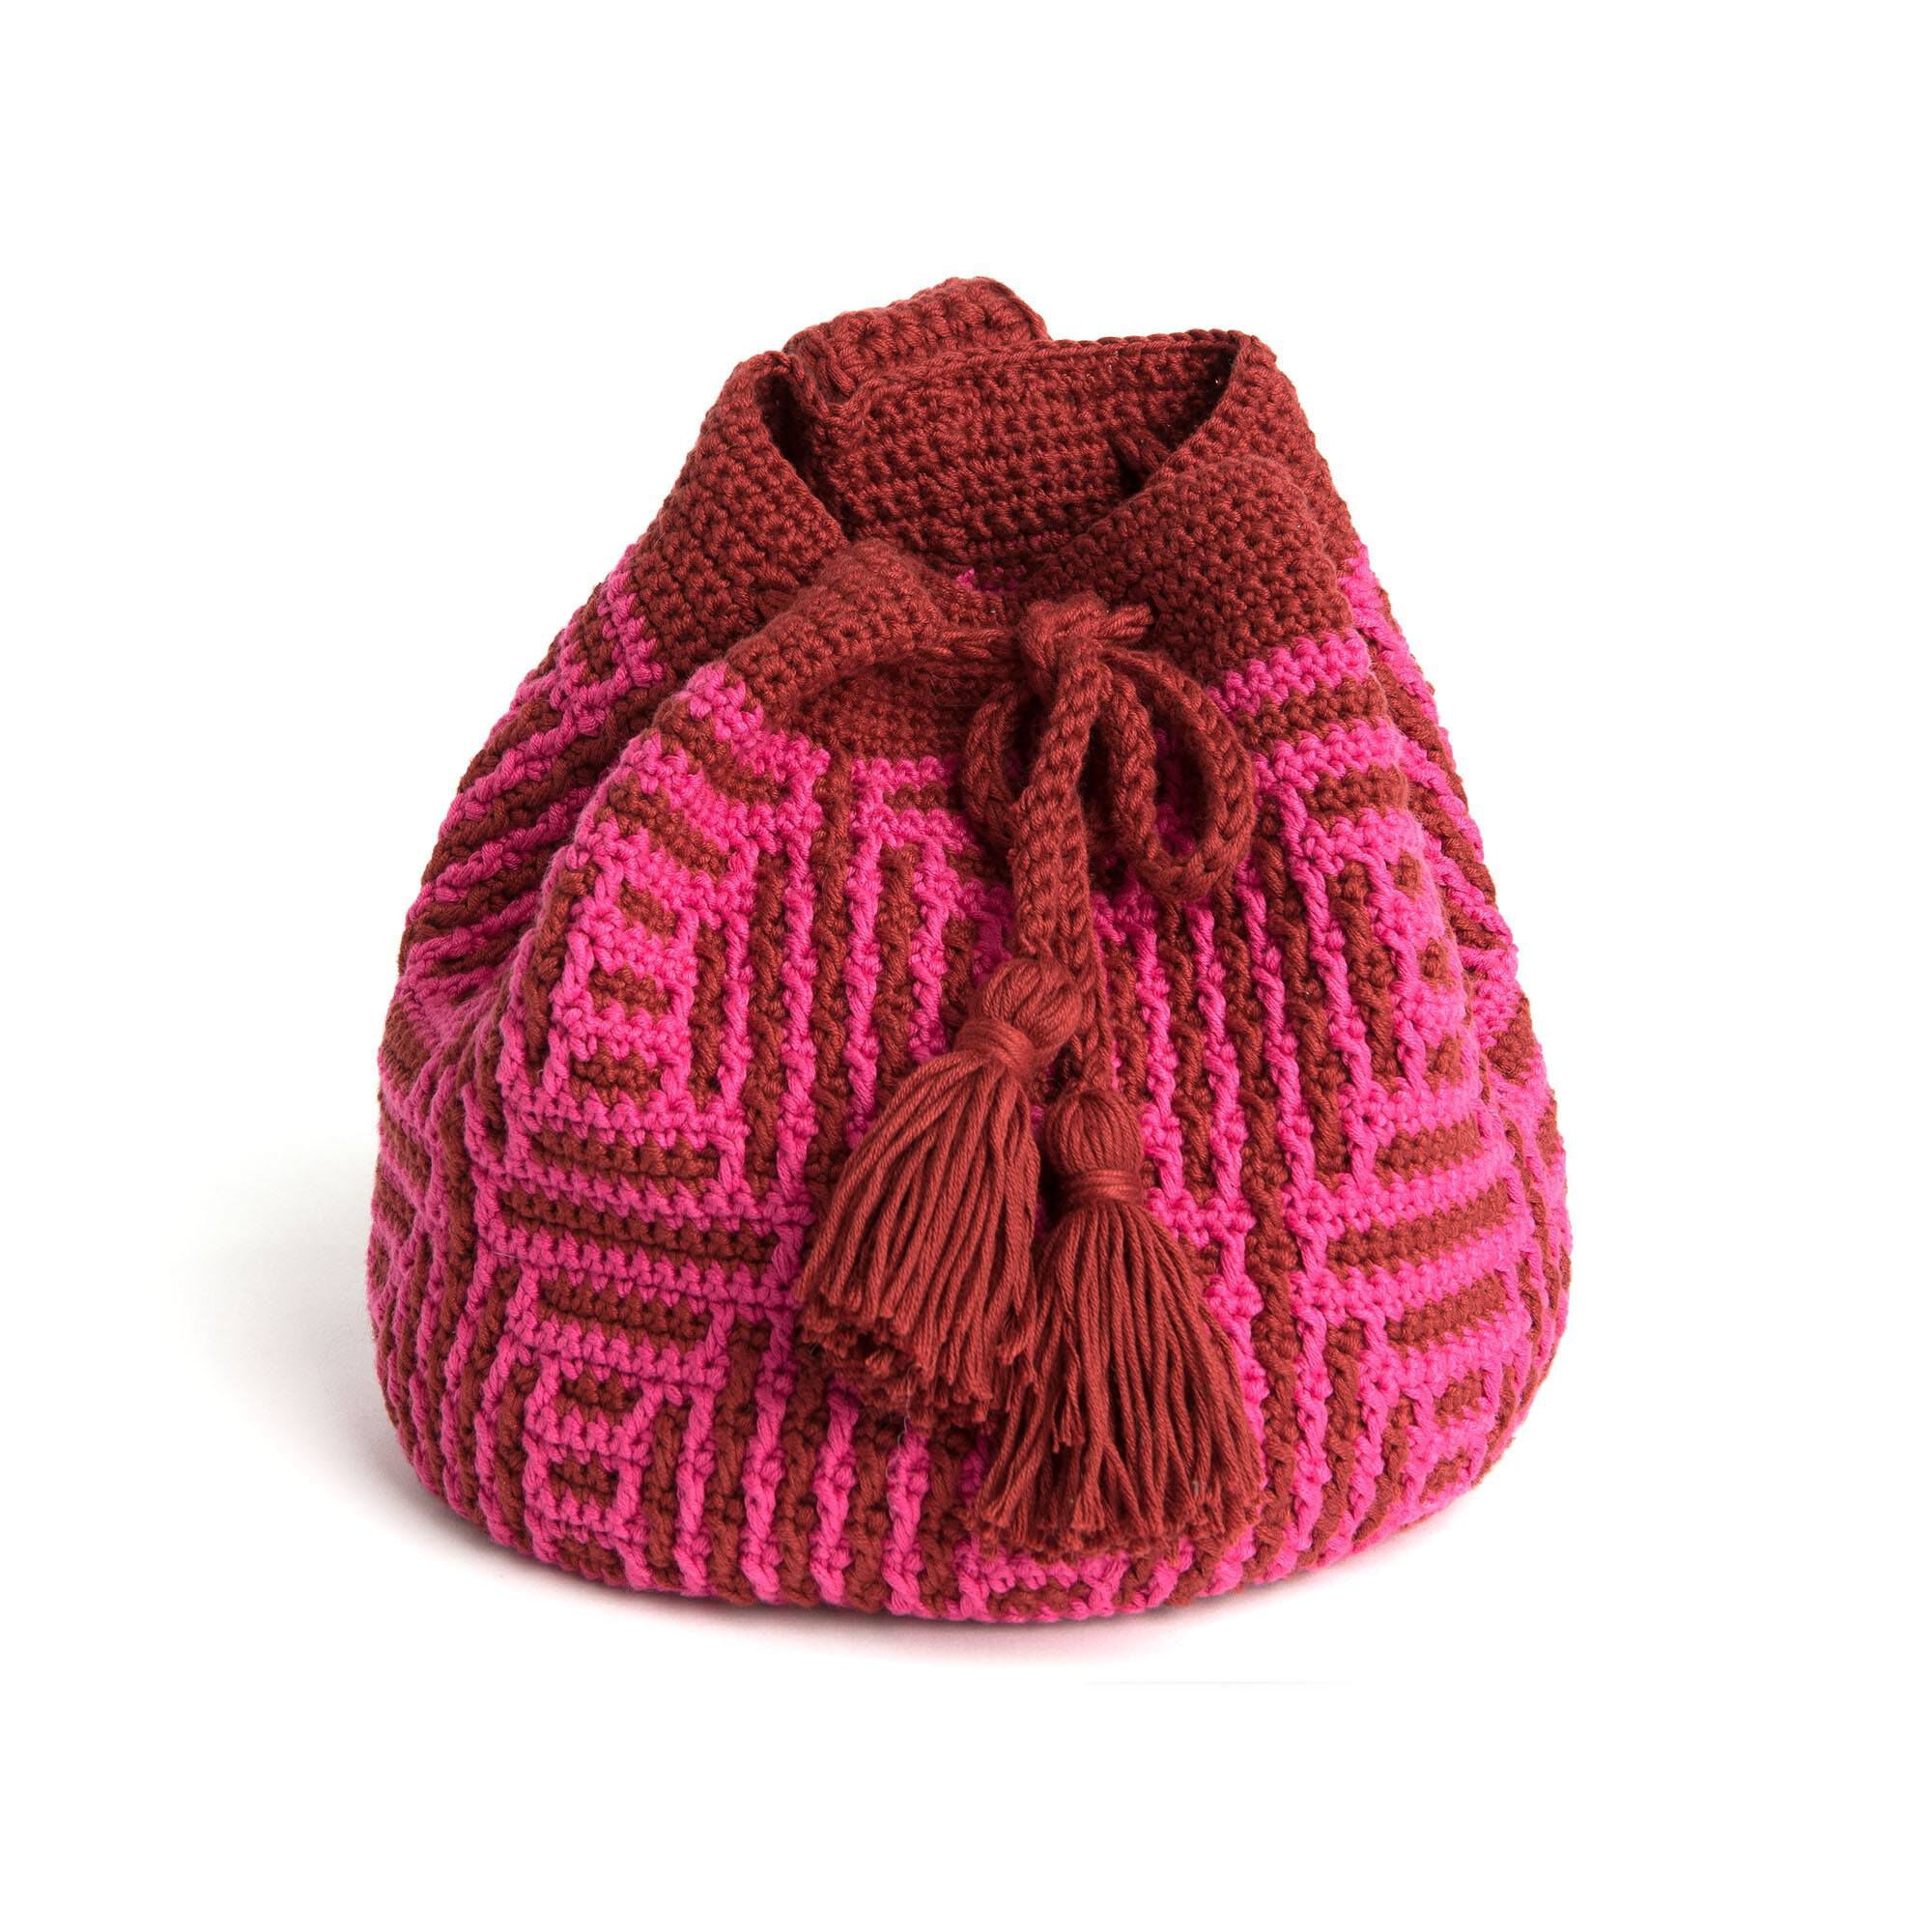 Bernat® Softee® Baby™ #3 Light Acrylic Yarn, Prettiest Pink 5oz/140g, 362  Yards 